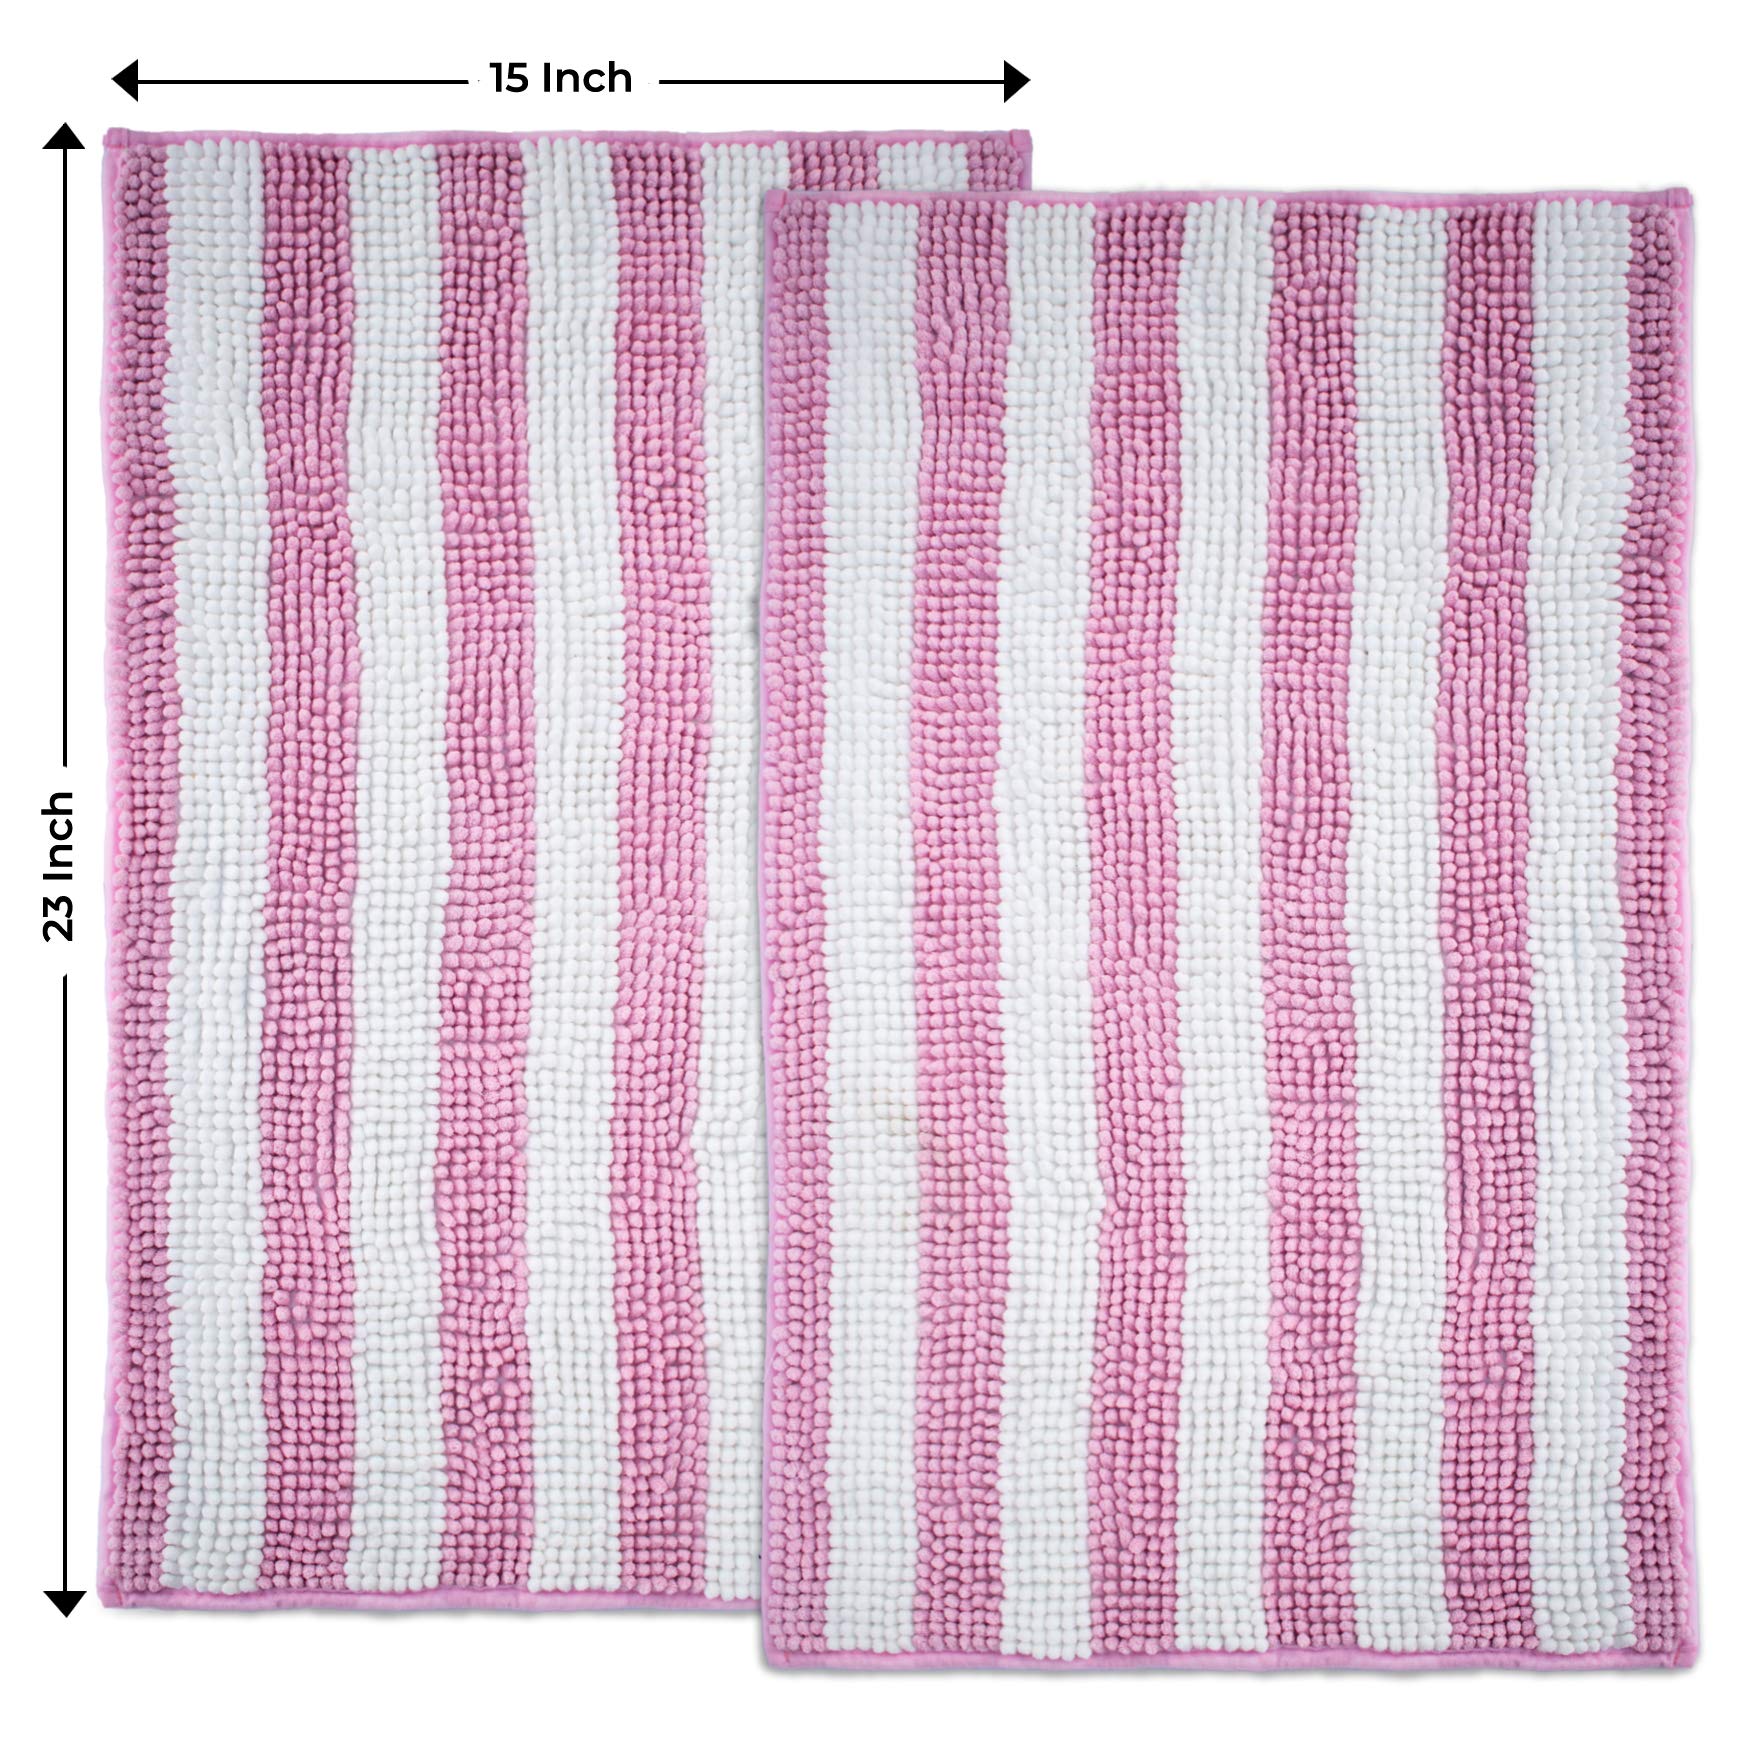 LuxUrux Bathroom Rug Mat Set�Extra-Soft Plush Bath mat Shower Bathroom Rugs 16 x 24 inch Set,1'' Chenille Microfiber Material, Super Absorbent. (15 x 23'', Striped Pink)  - Very Good